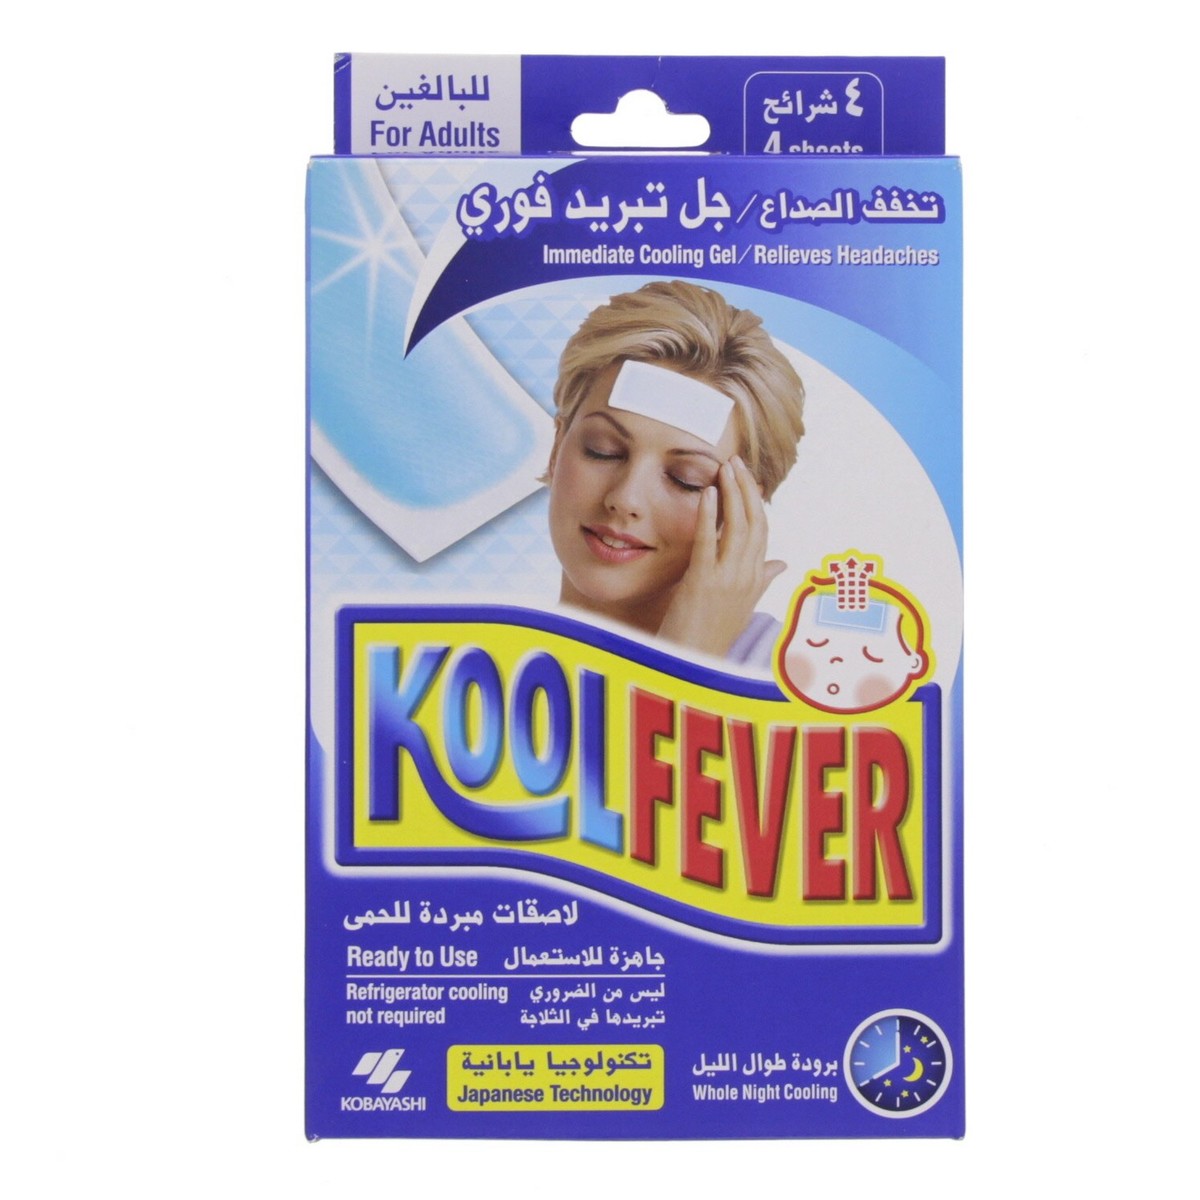 Kool fever adult